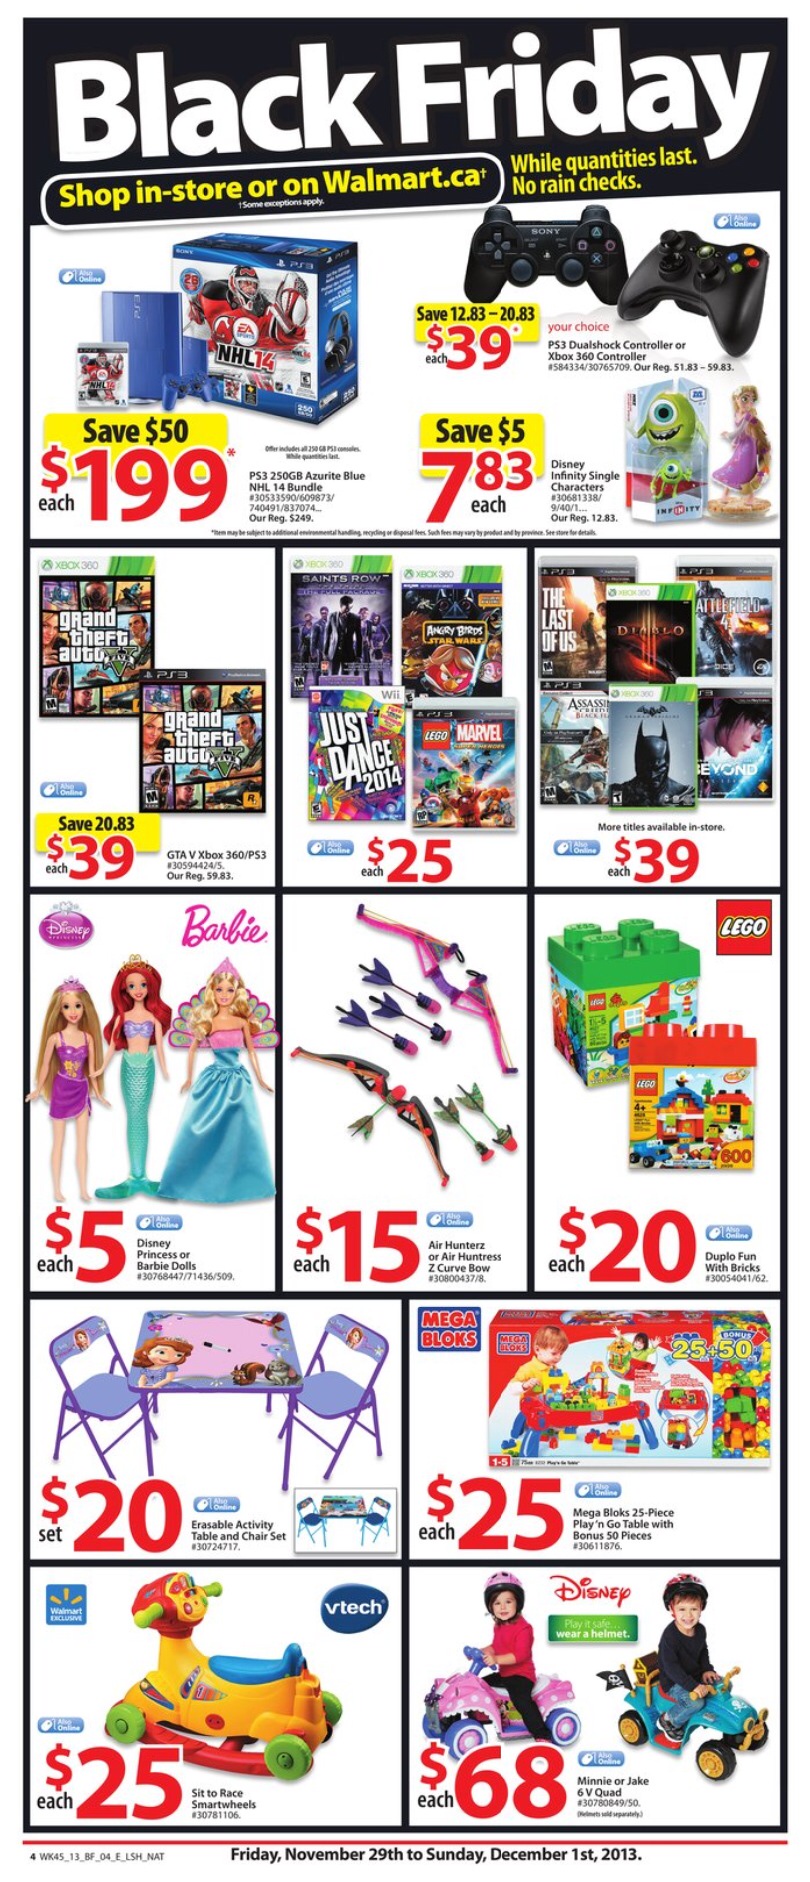 WalMart Canada Black Friday 2013 Sales and Deals Flyer › Black Friday Canada